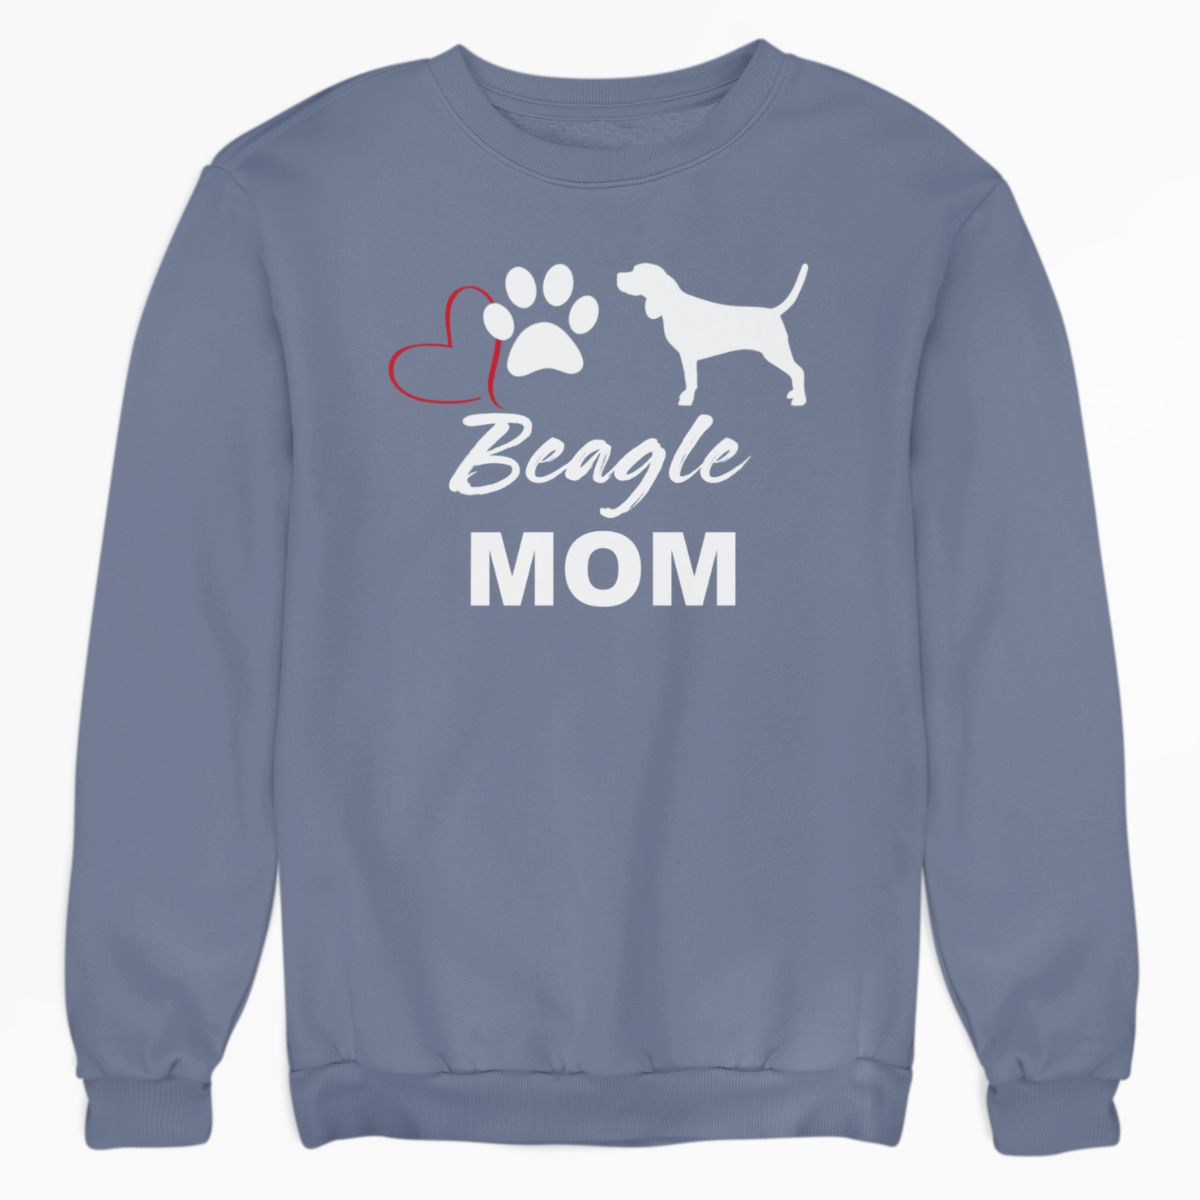 Beagle Mom Shirt